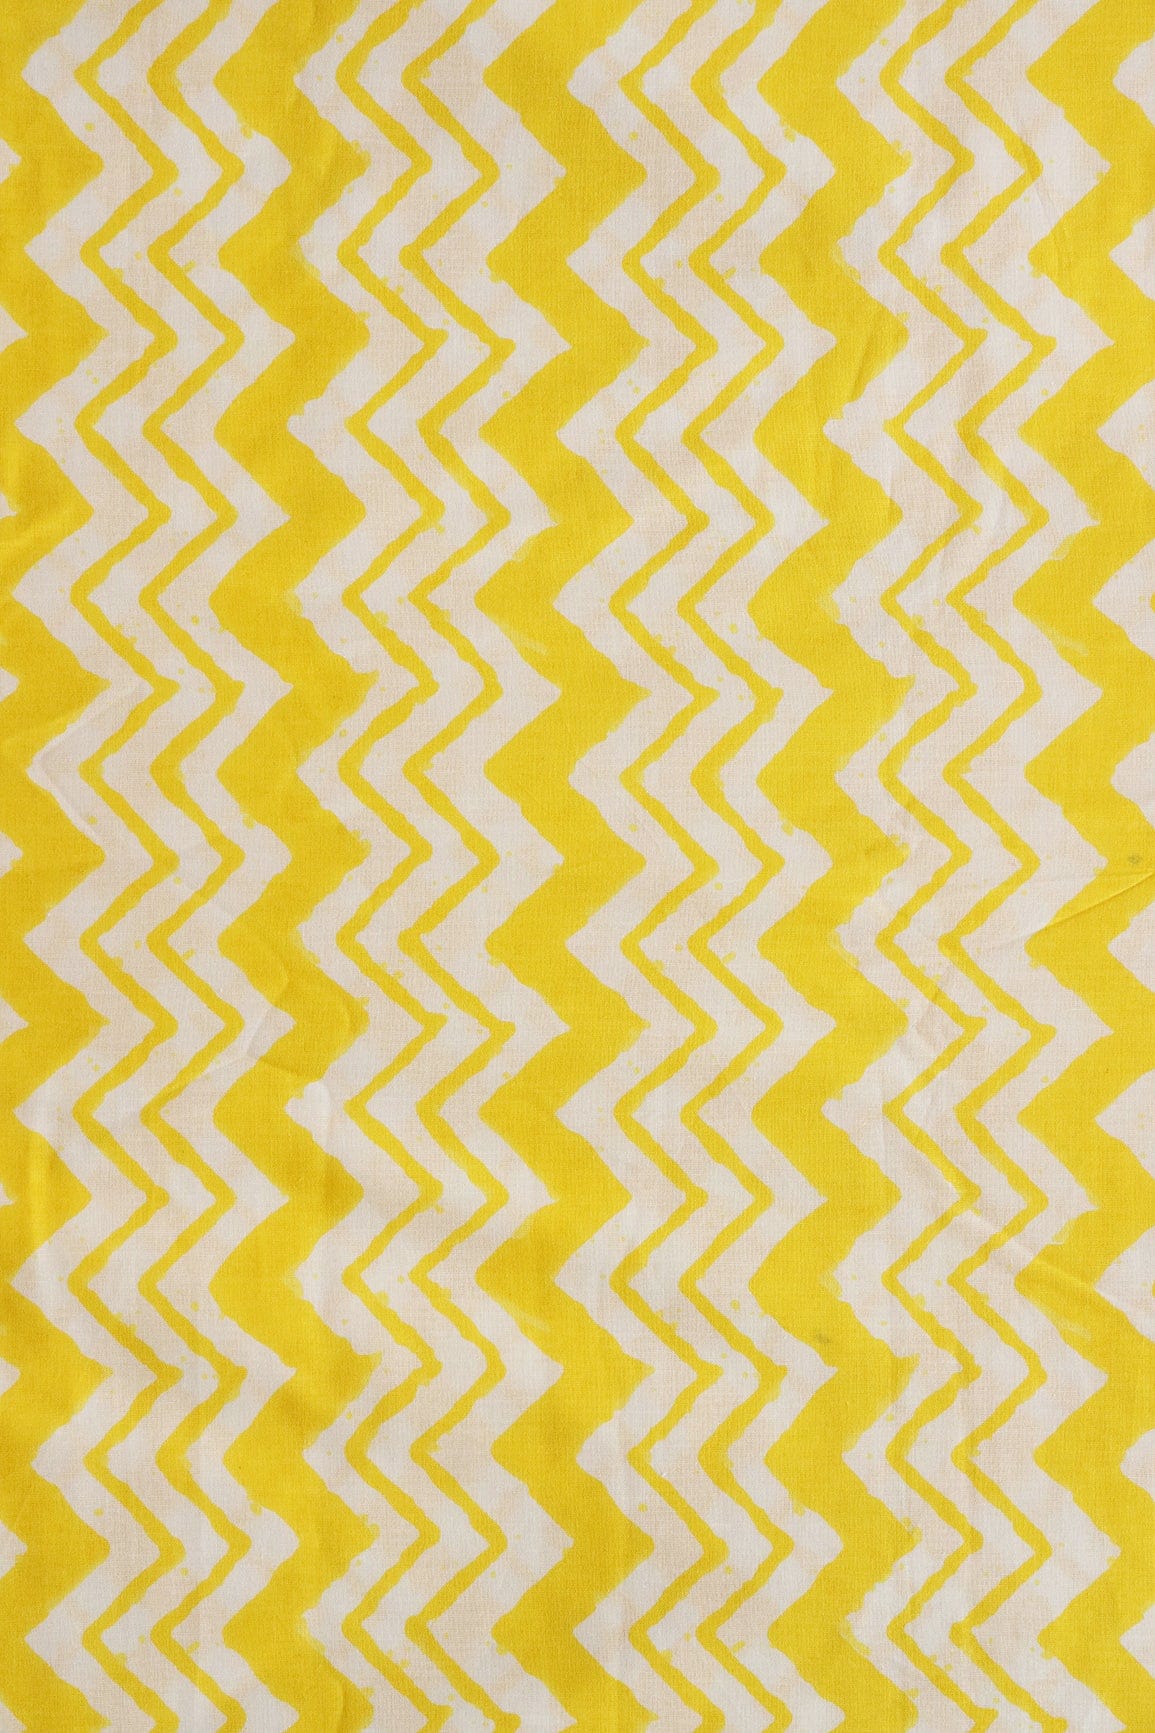 doeraa Prints White And Yellow Chevron Print On Pure Mul Cotton Fabric